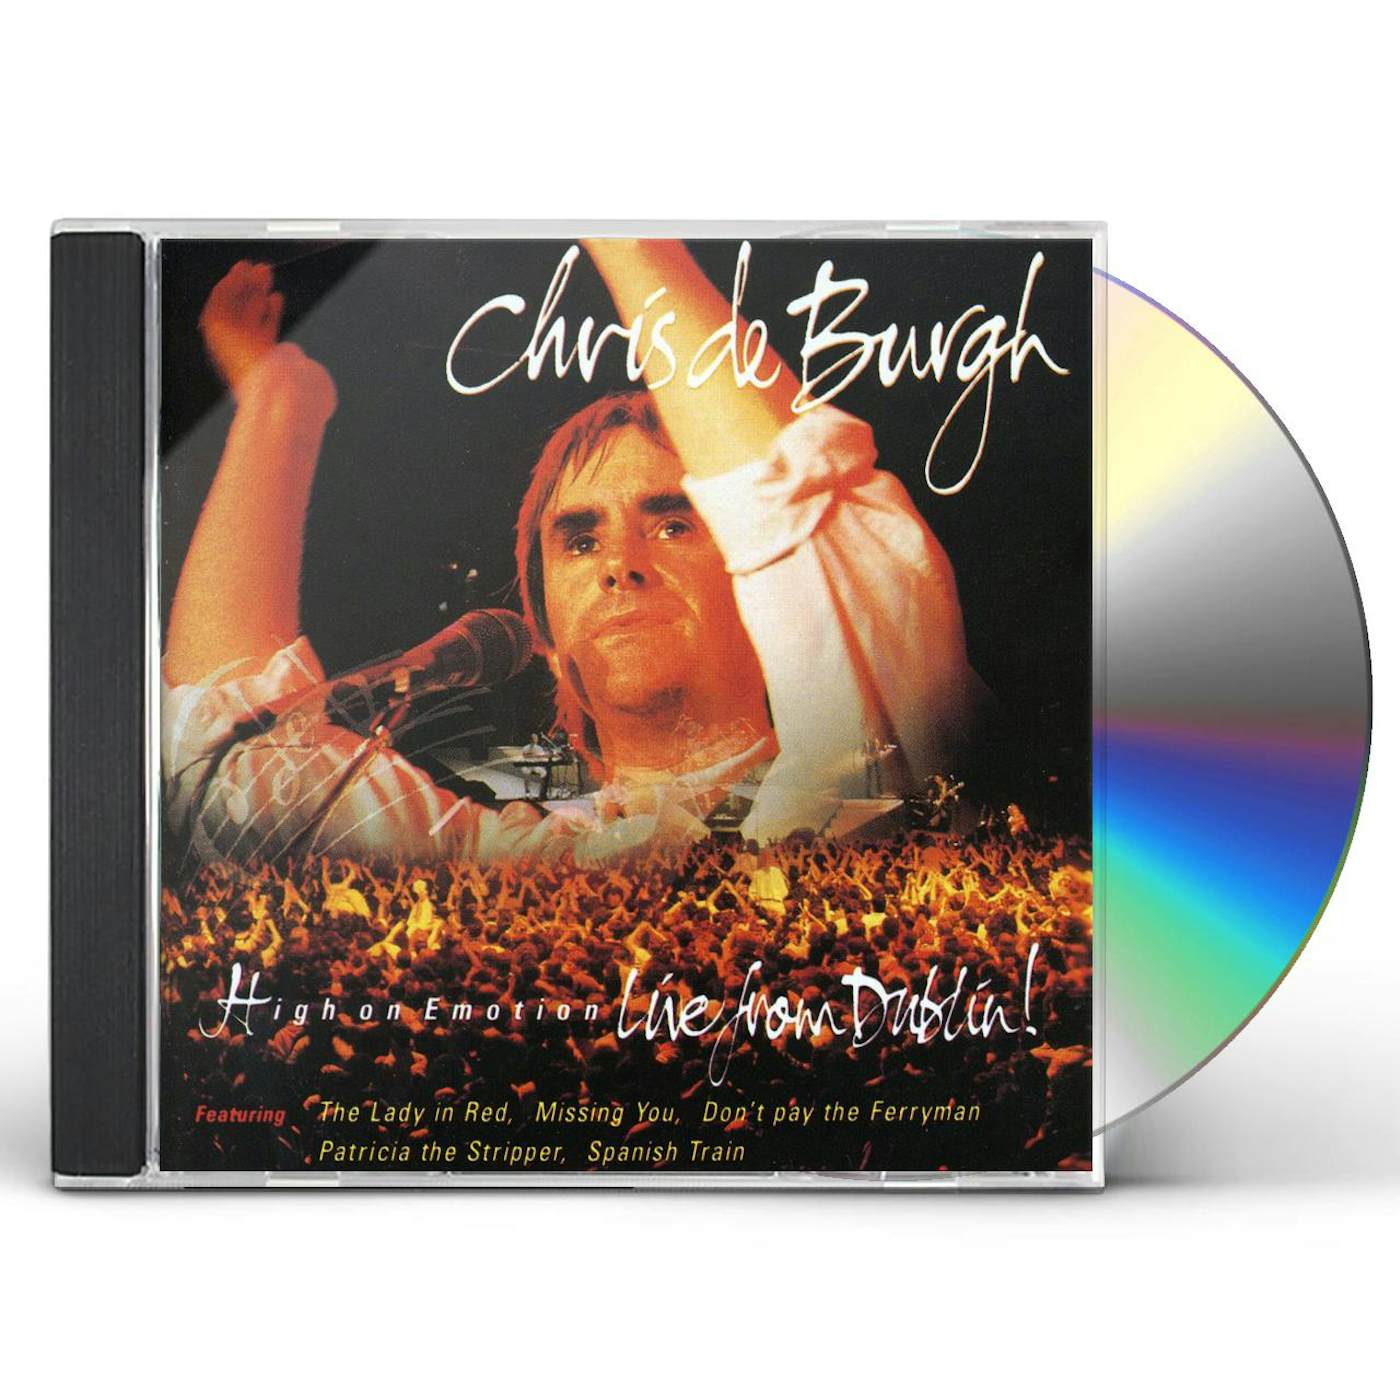 Chris de Burgh HIGH ON EMOTION - LIVE FROM DUBLIN CD